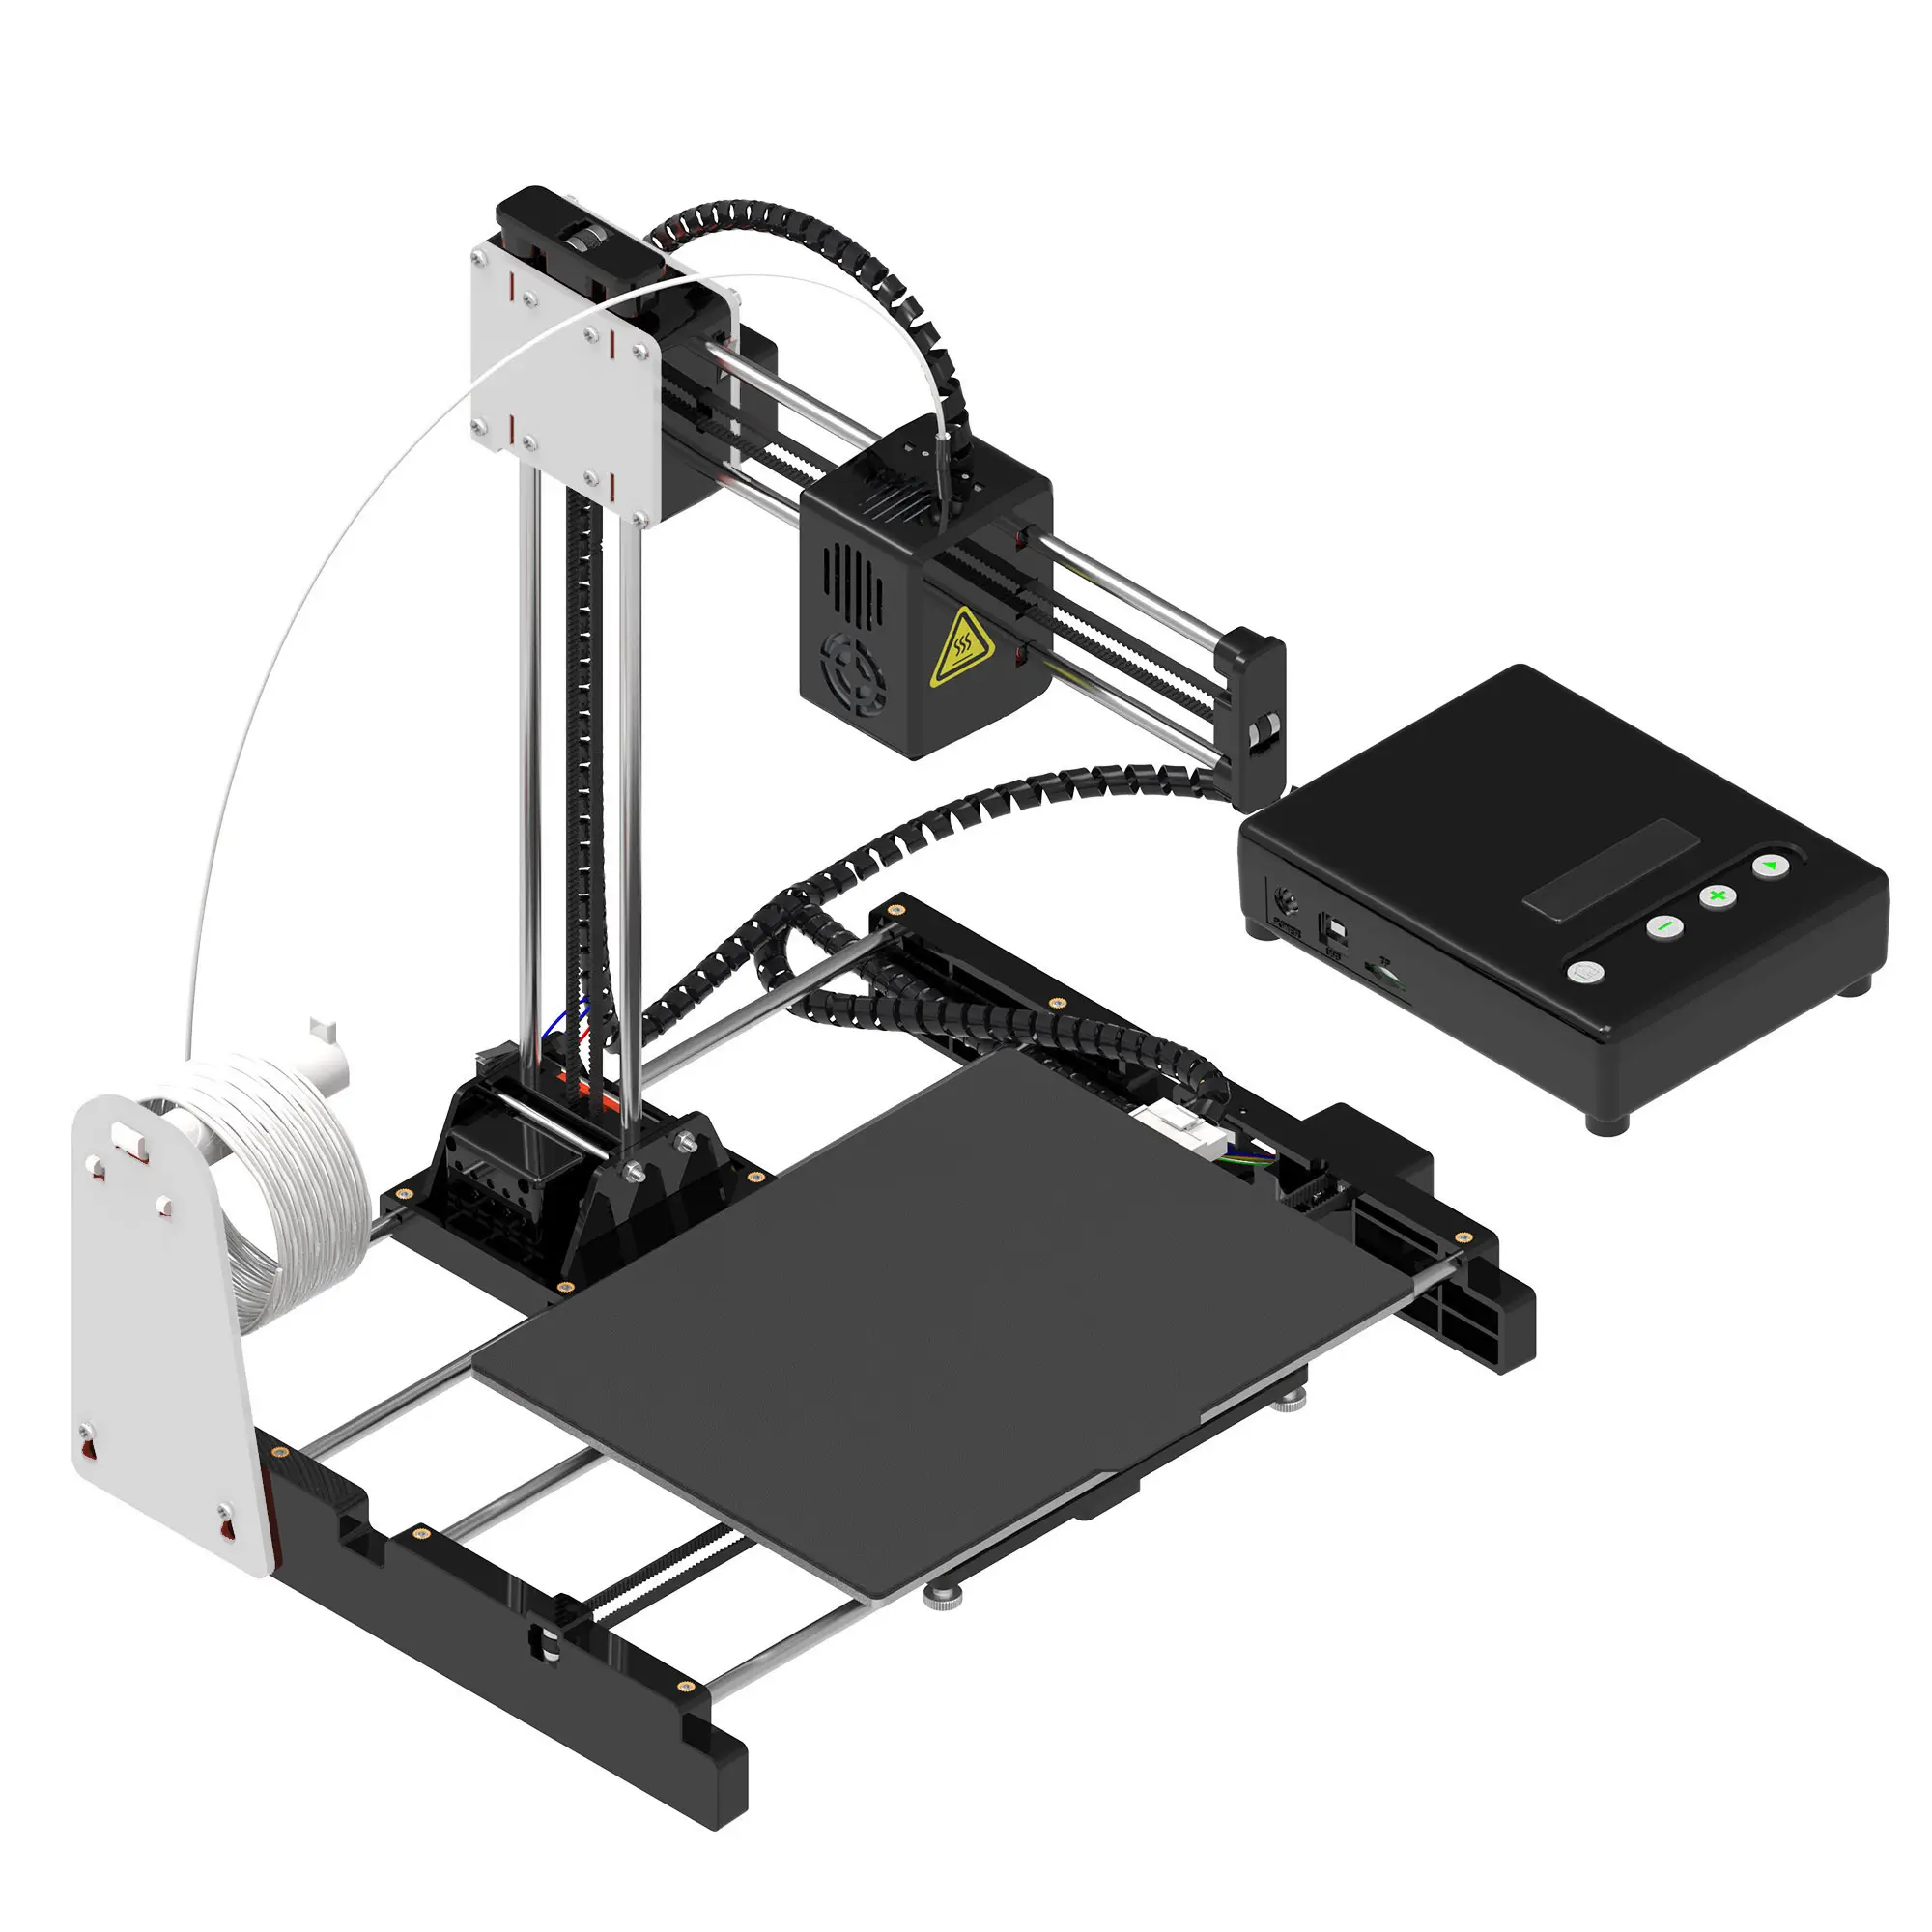 3d Printer Ender 3 V2 Fdm Printer Smart Filament Sensor Self-assemble Printer Kit Ender-3 Diy 3d Machine